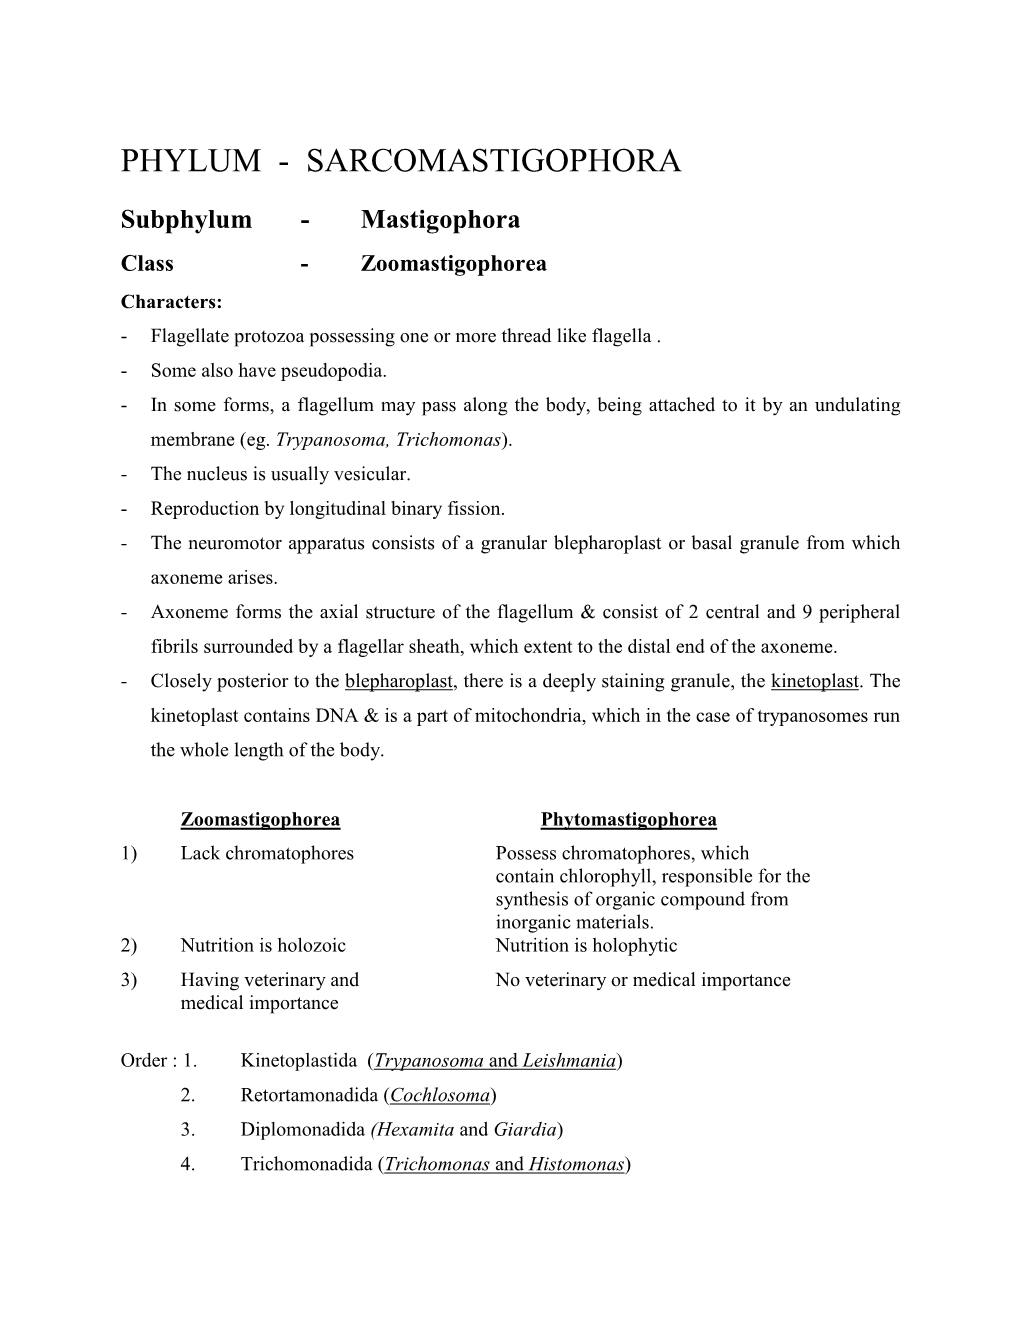 Phylum - Sarcomastigophora